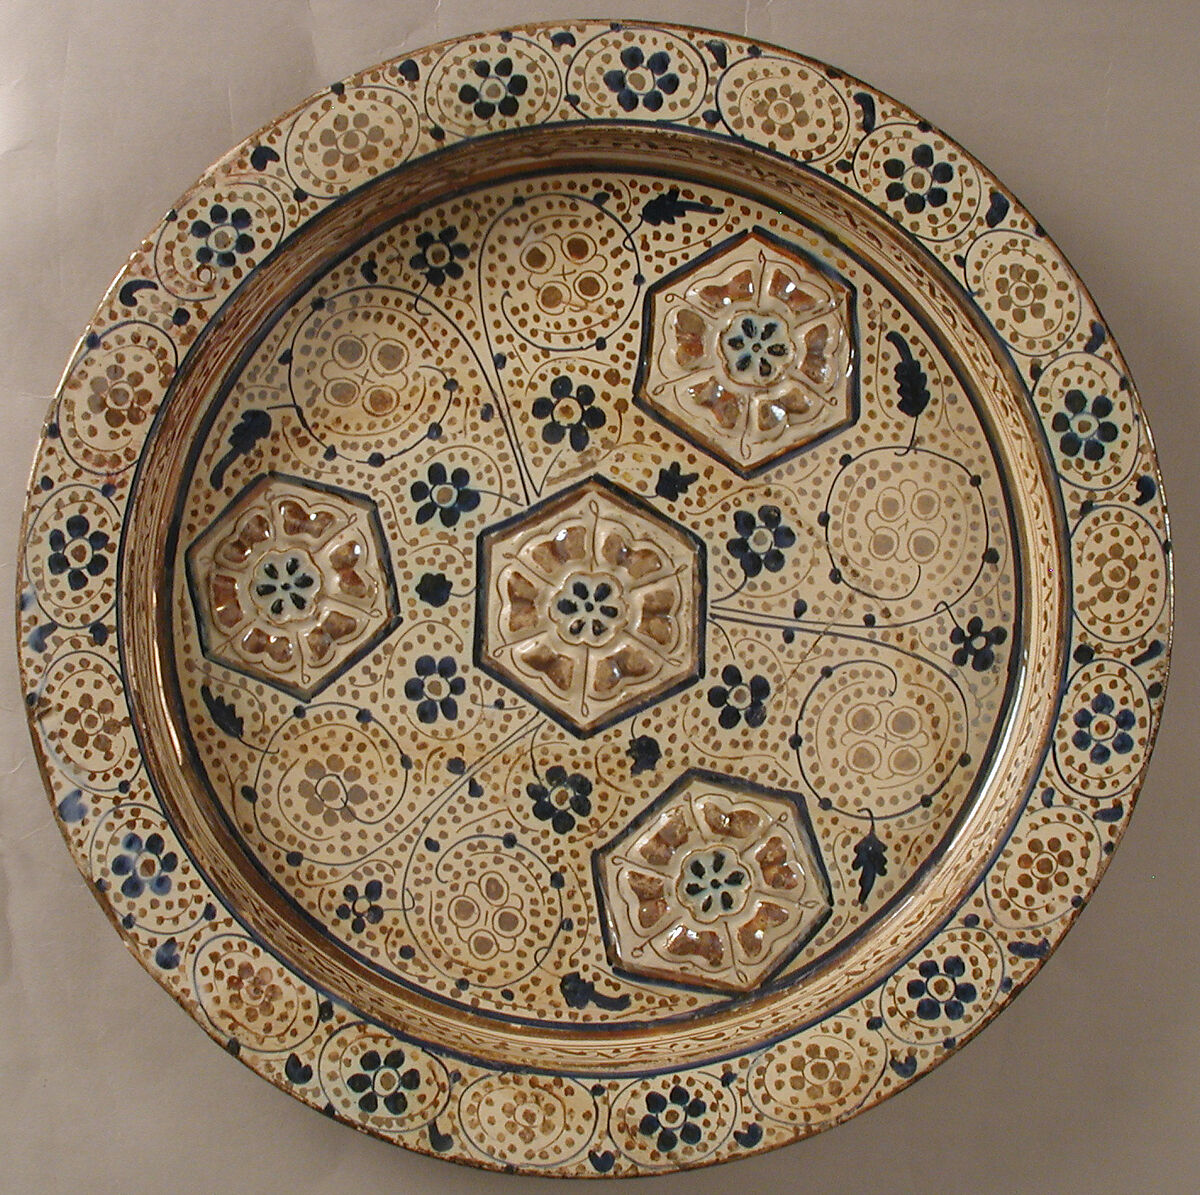 Dish, Tin-glazed earthenware, Spanish